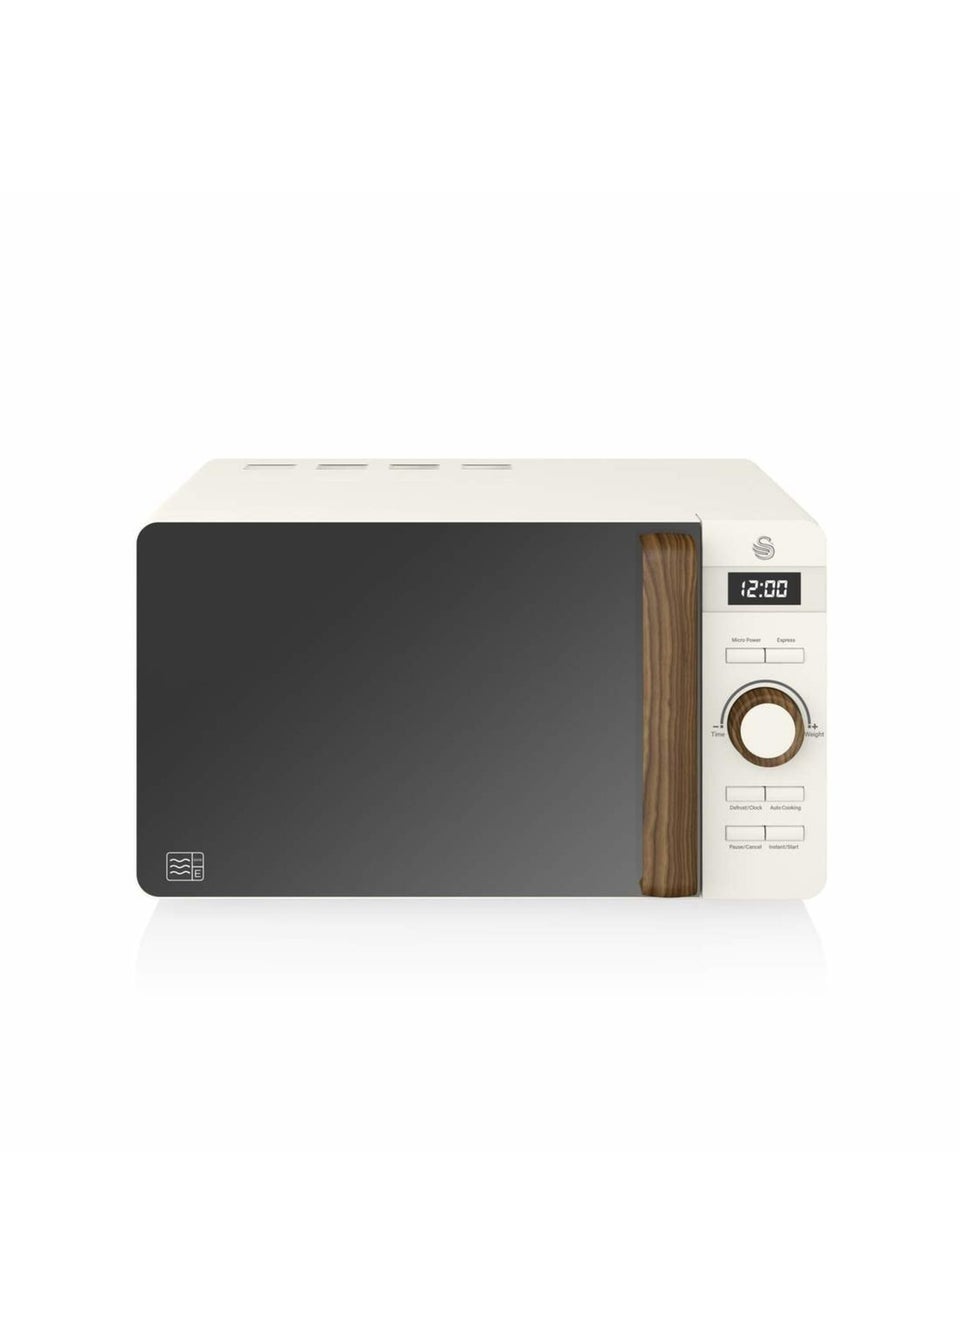 Swan Nordic White Digital Microwave (20L)